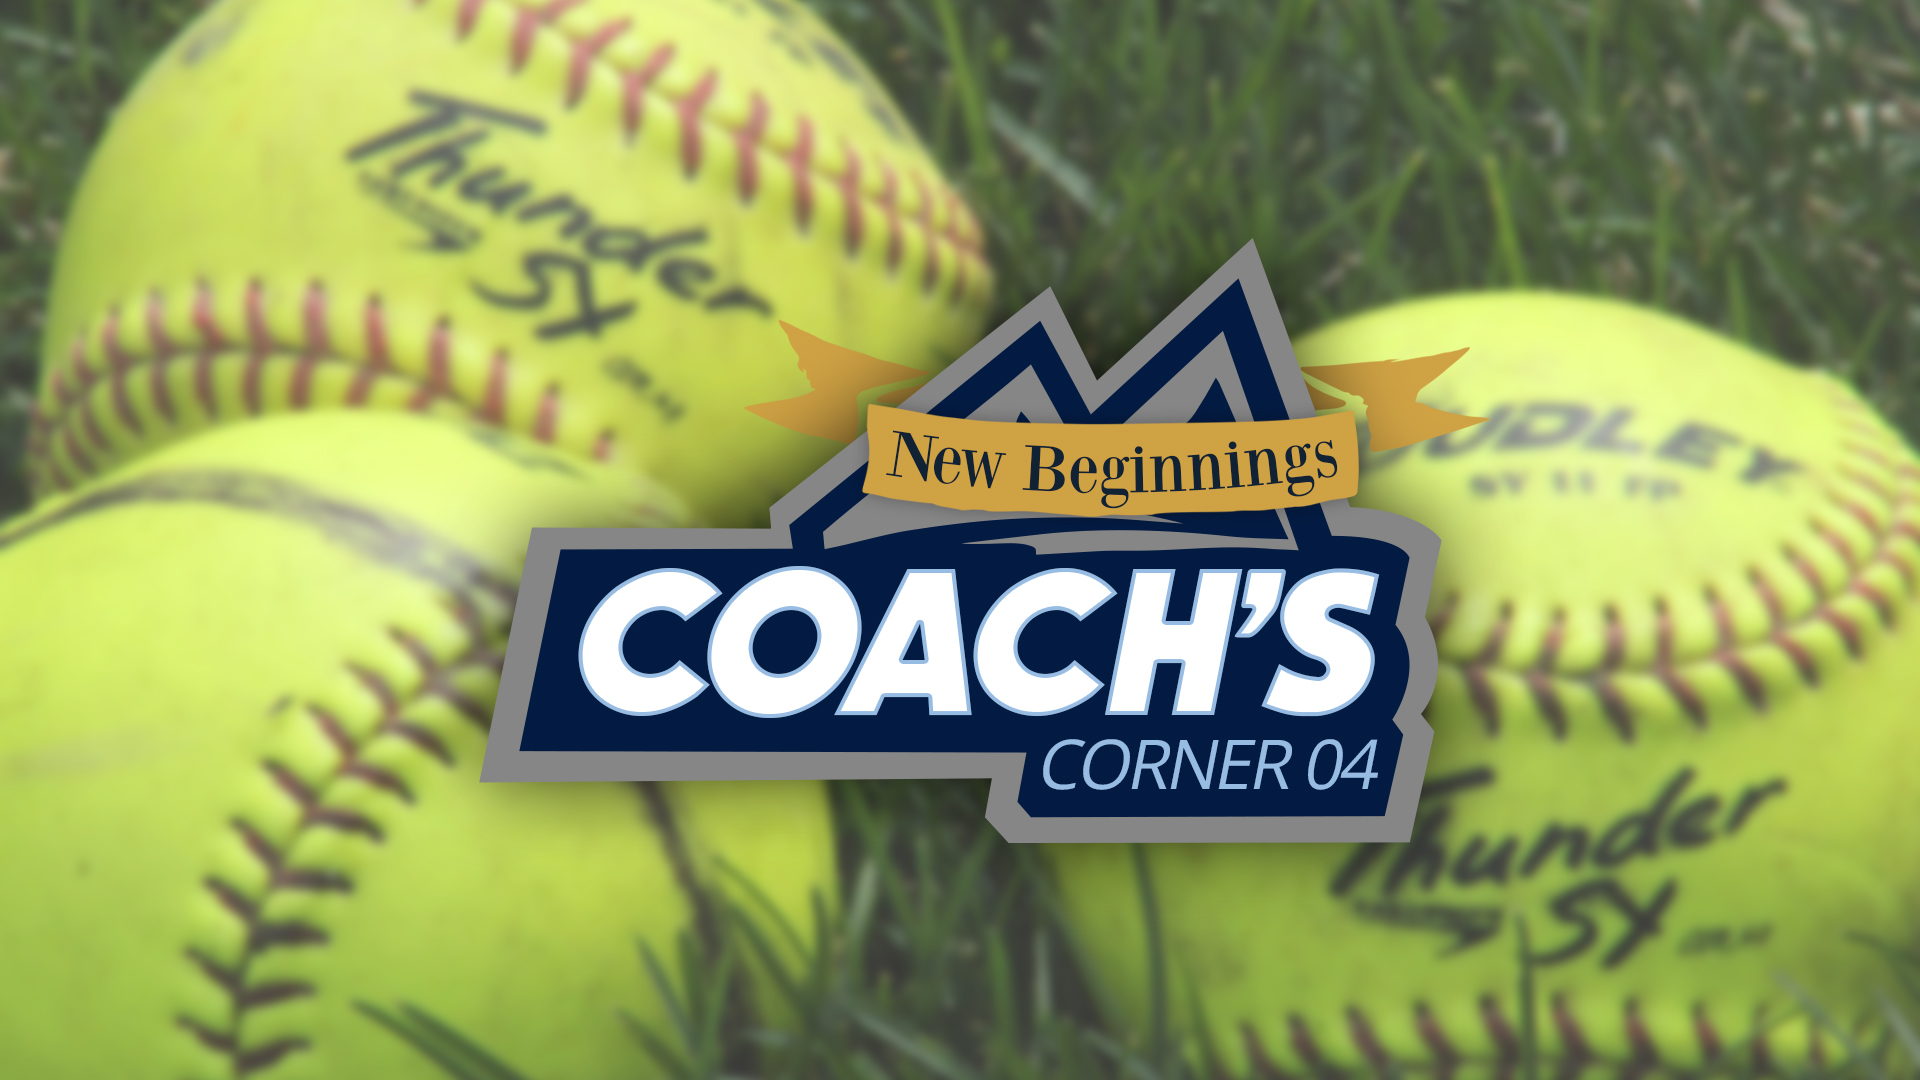 Coach's Corner 04: New Beginnings